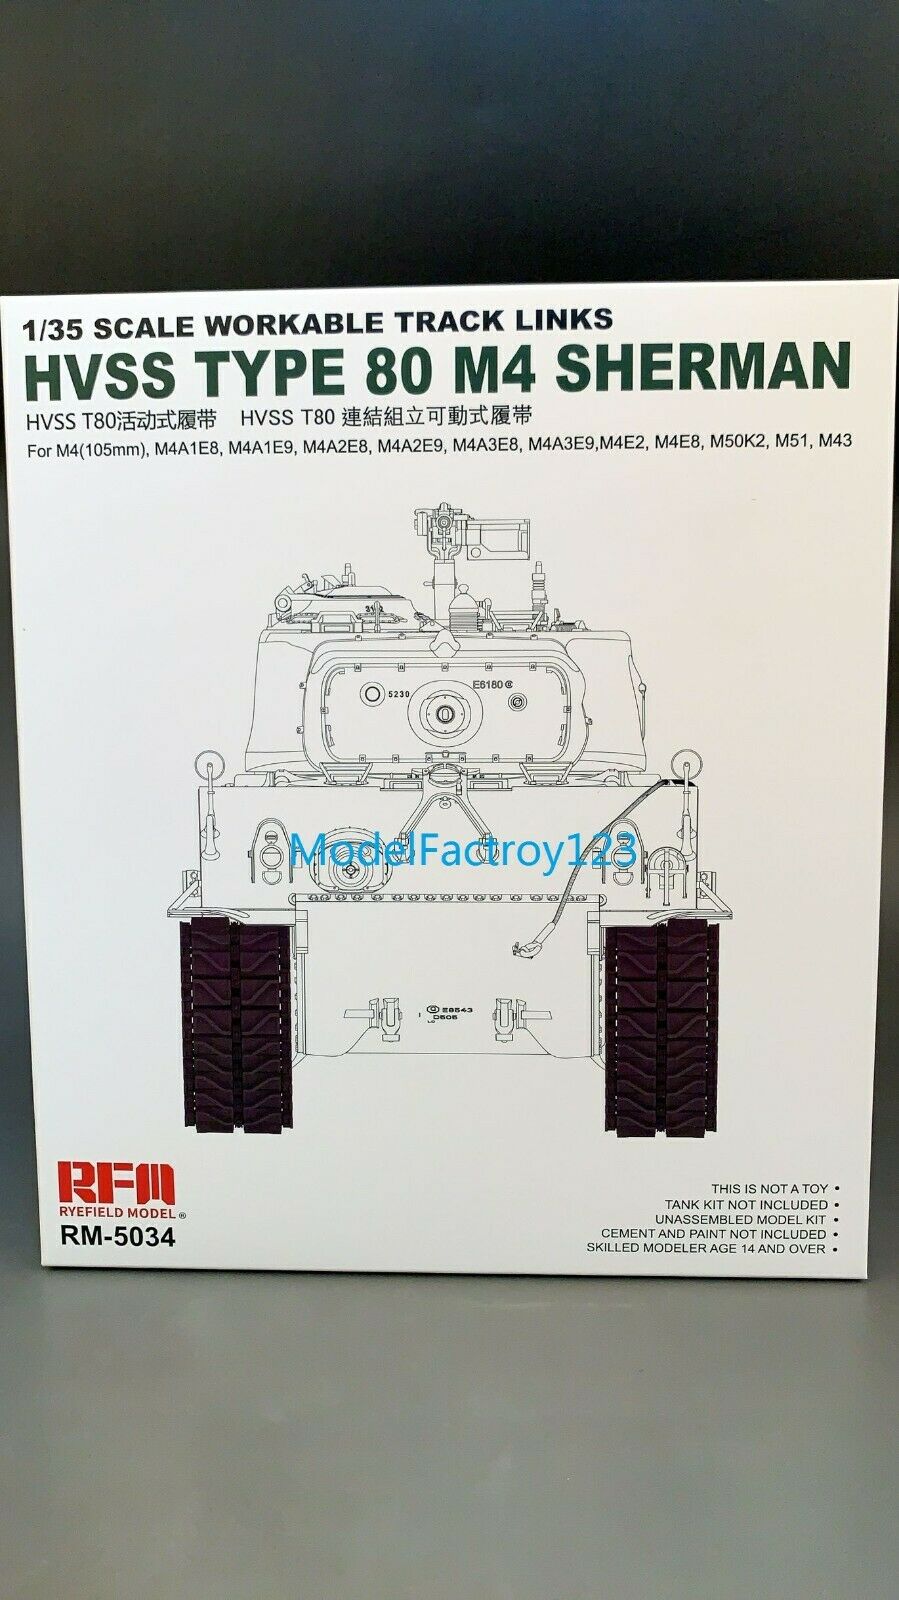 Rye Field Model RFM RM-5034 1/35 Workable Track for HVSS Type 80 M4 Sherman